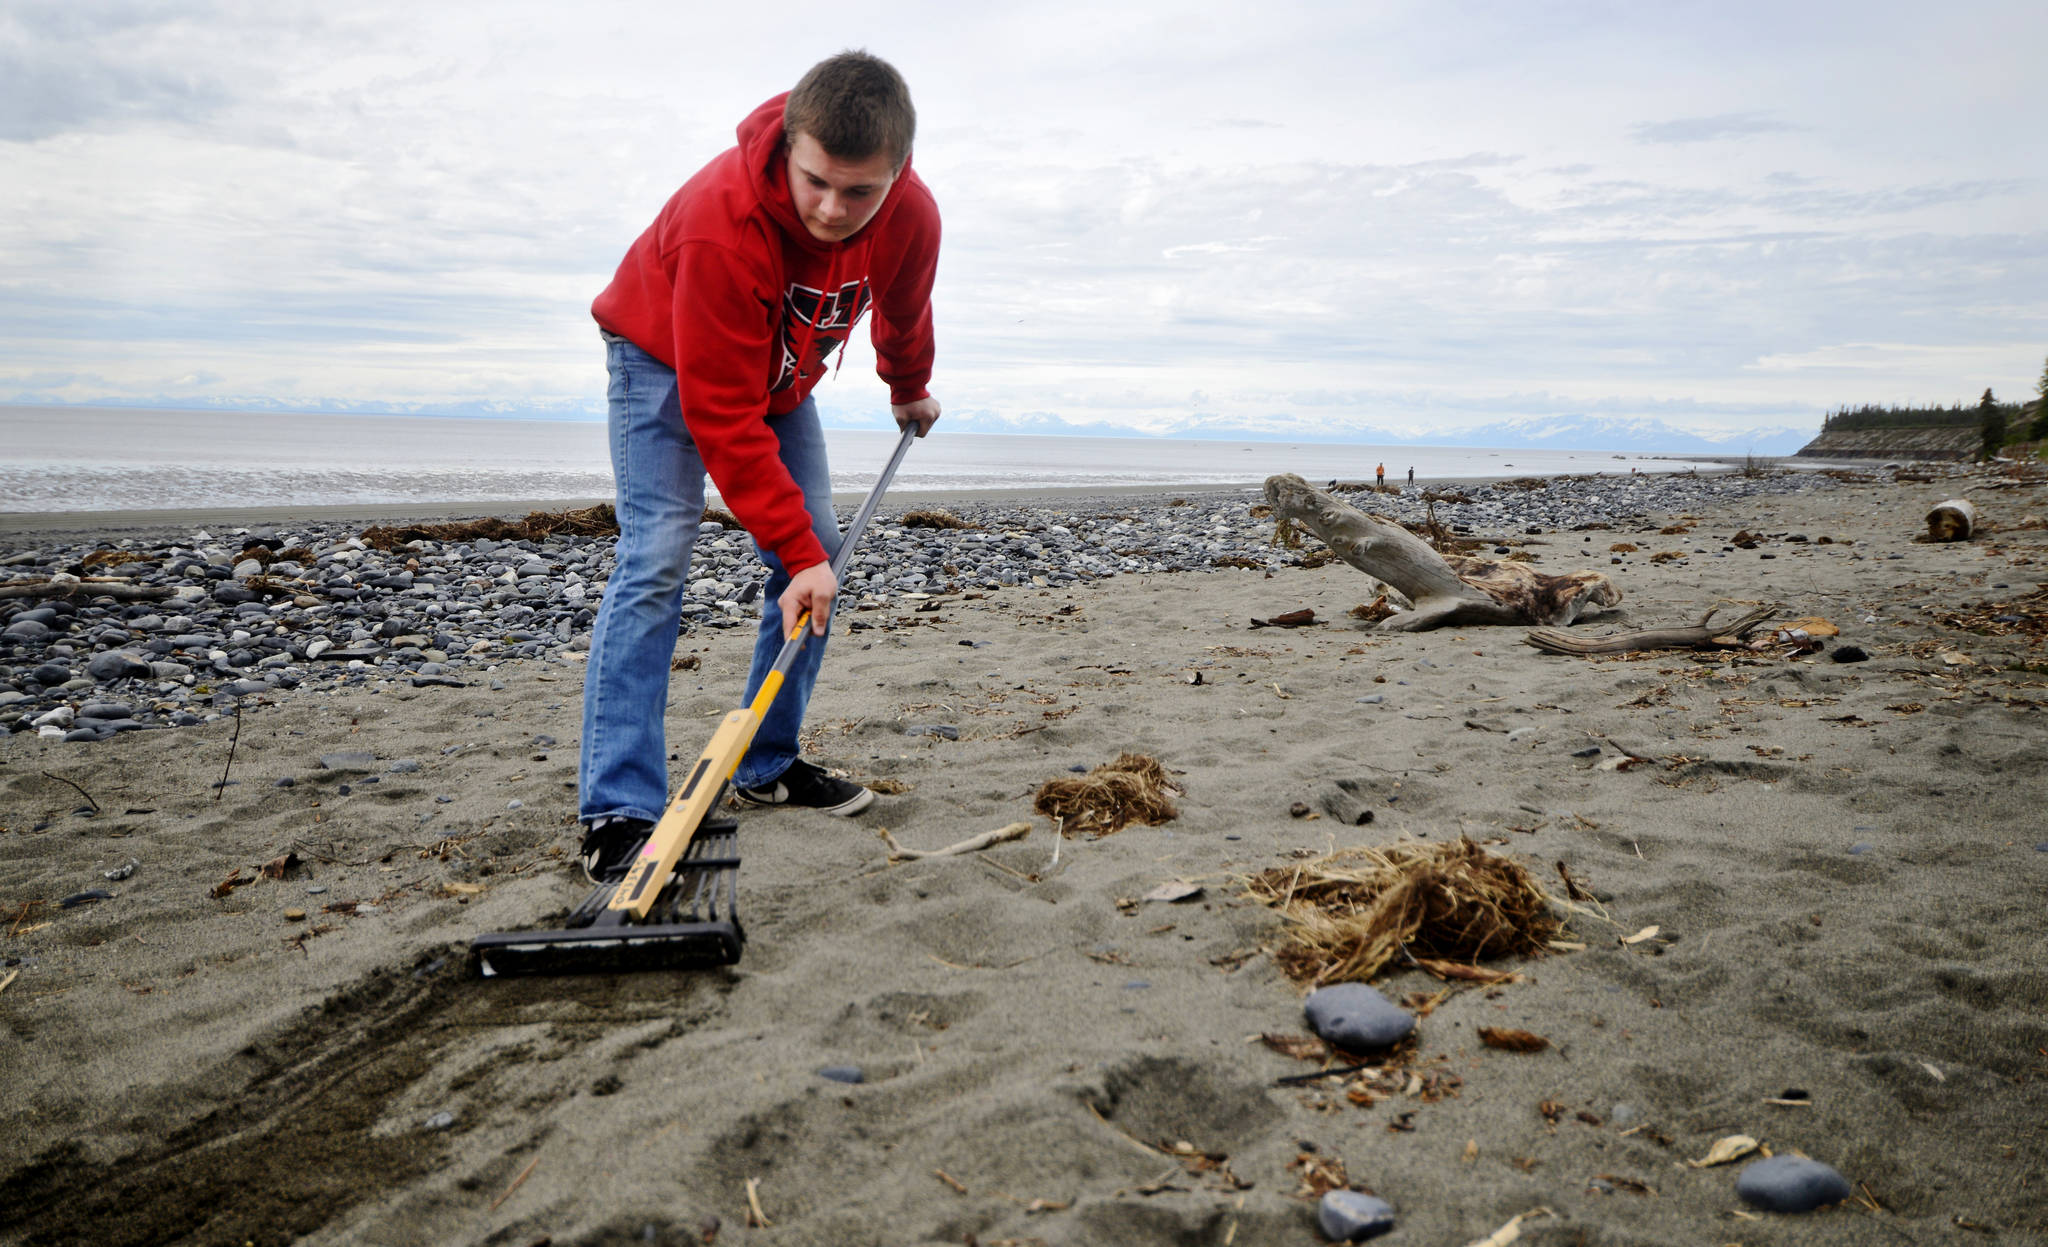 Kenai Central High School sophmore Riley Graves demonstrates a magnetic rake he built to pick up buried metallic debris on Kenai’s north beach on Wednesday, June 20, 2018 in Kenai, Alaska. (Photo by Ben Boettger/Peninsula Clarion)